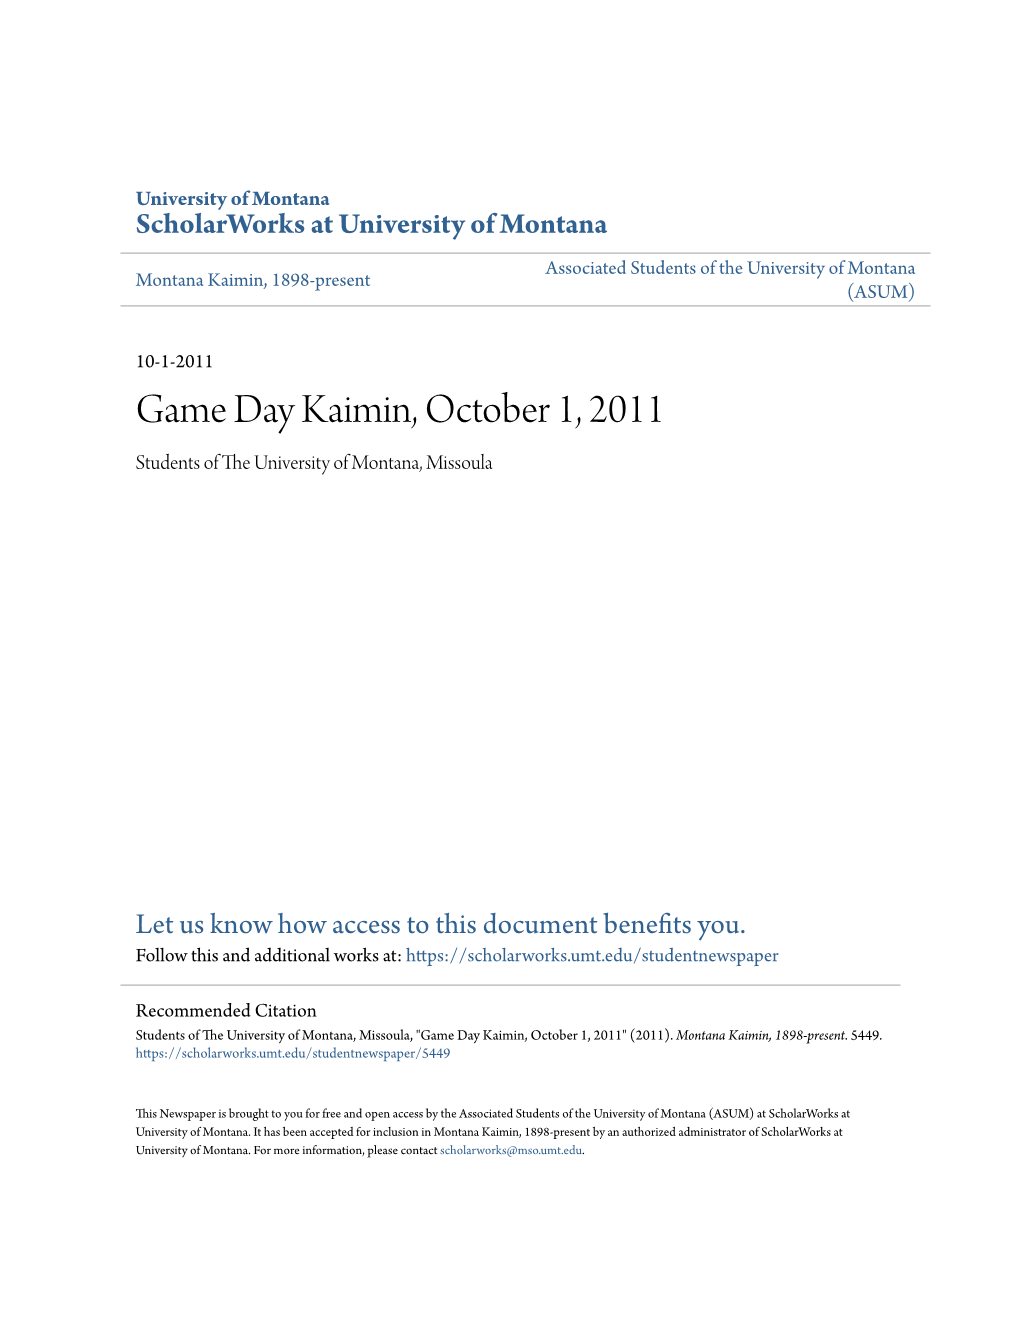 Game Day Kaimin, October 1, 2011 Students of the Niu Versity of Montana, Missoula